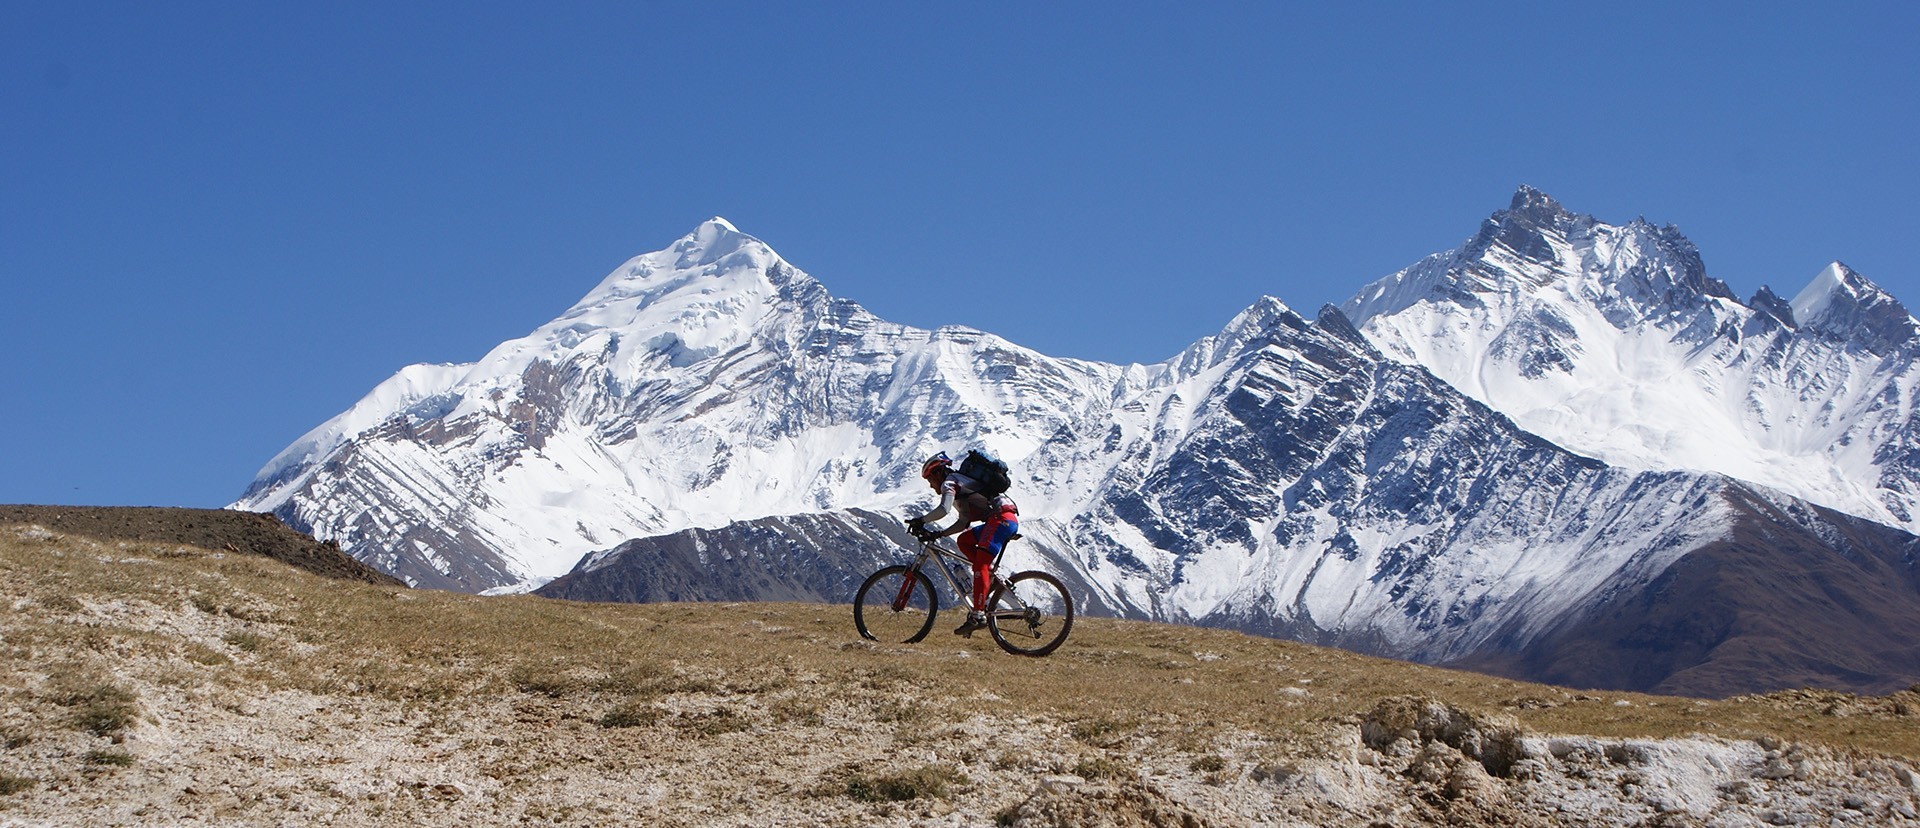 Mountain Biking Tours in the Himalayas